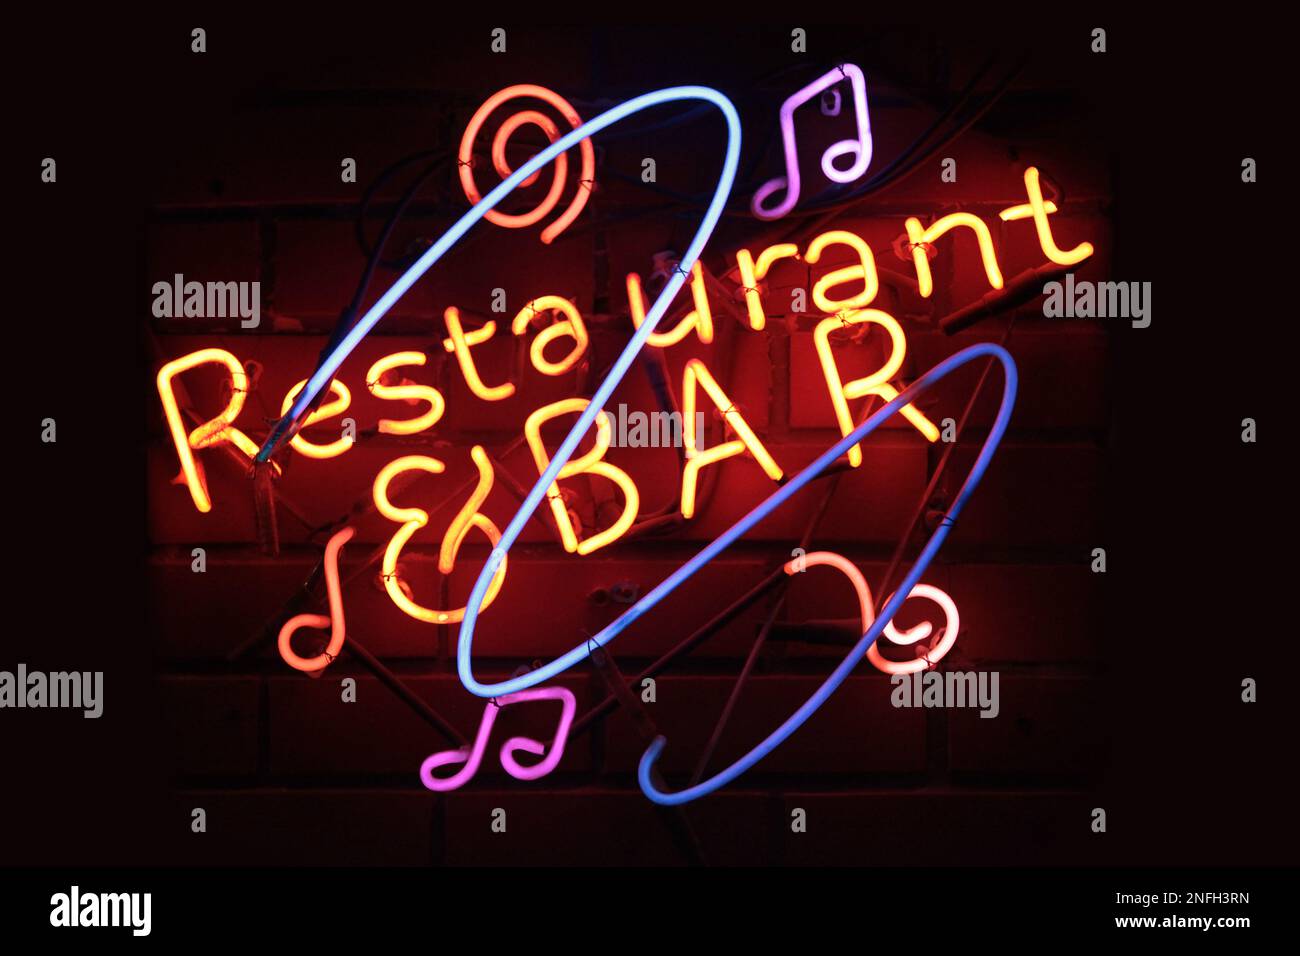 A neon light shaped into the phrase 'Restaurant & Bar'. Stock Photo